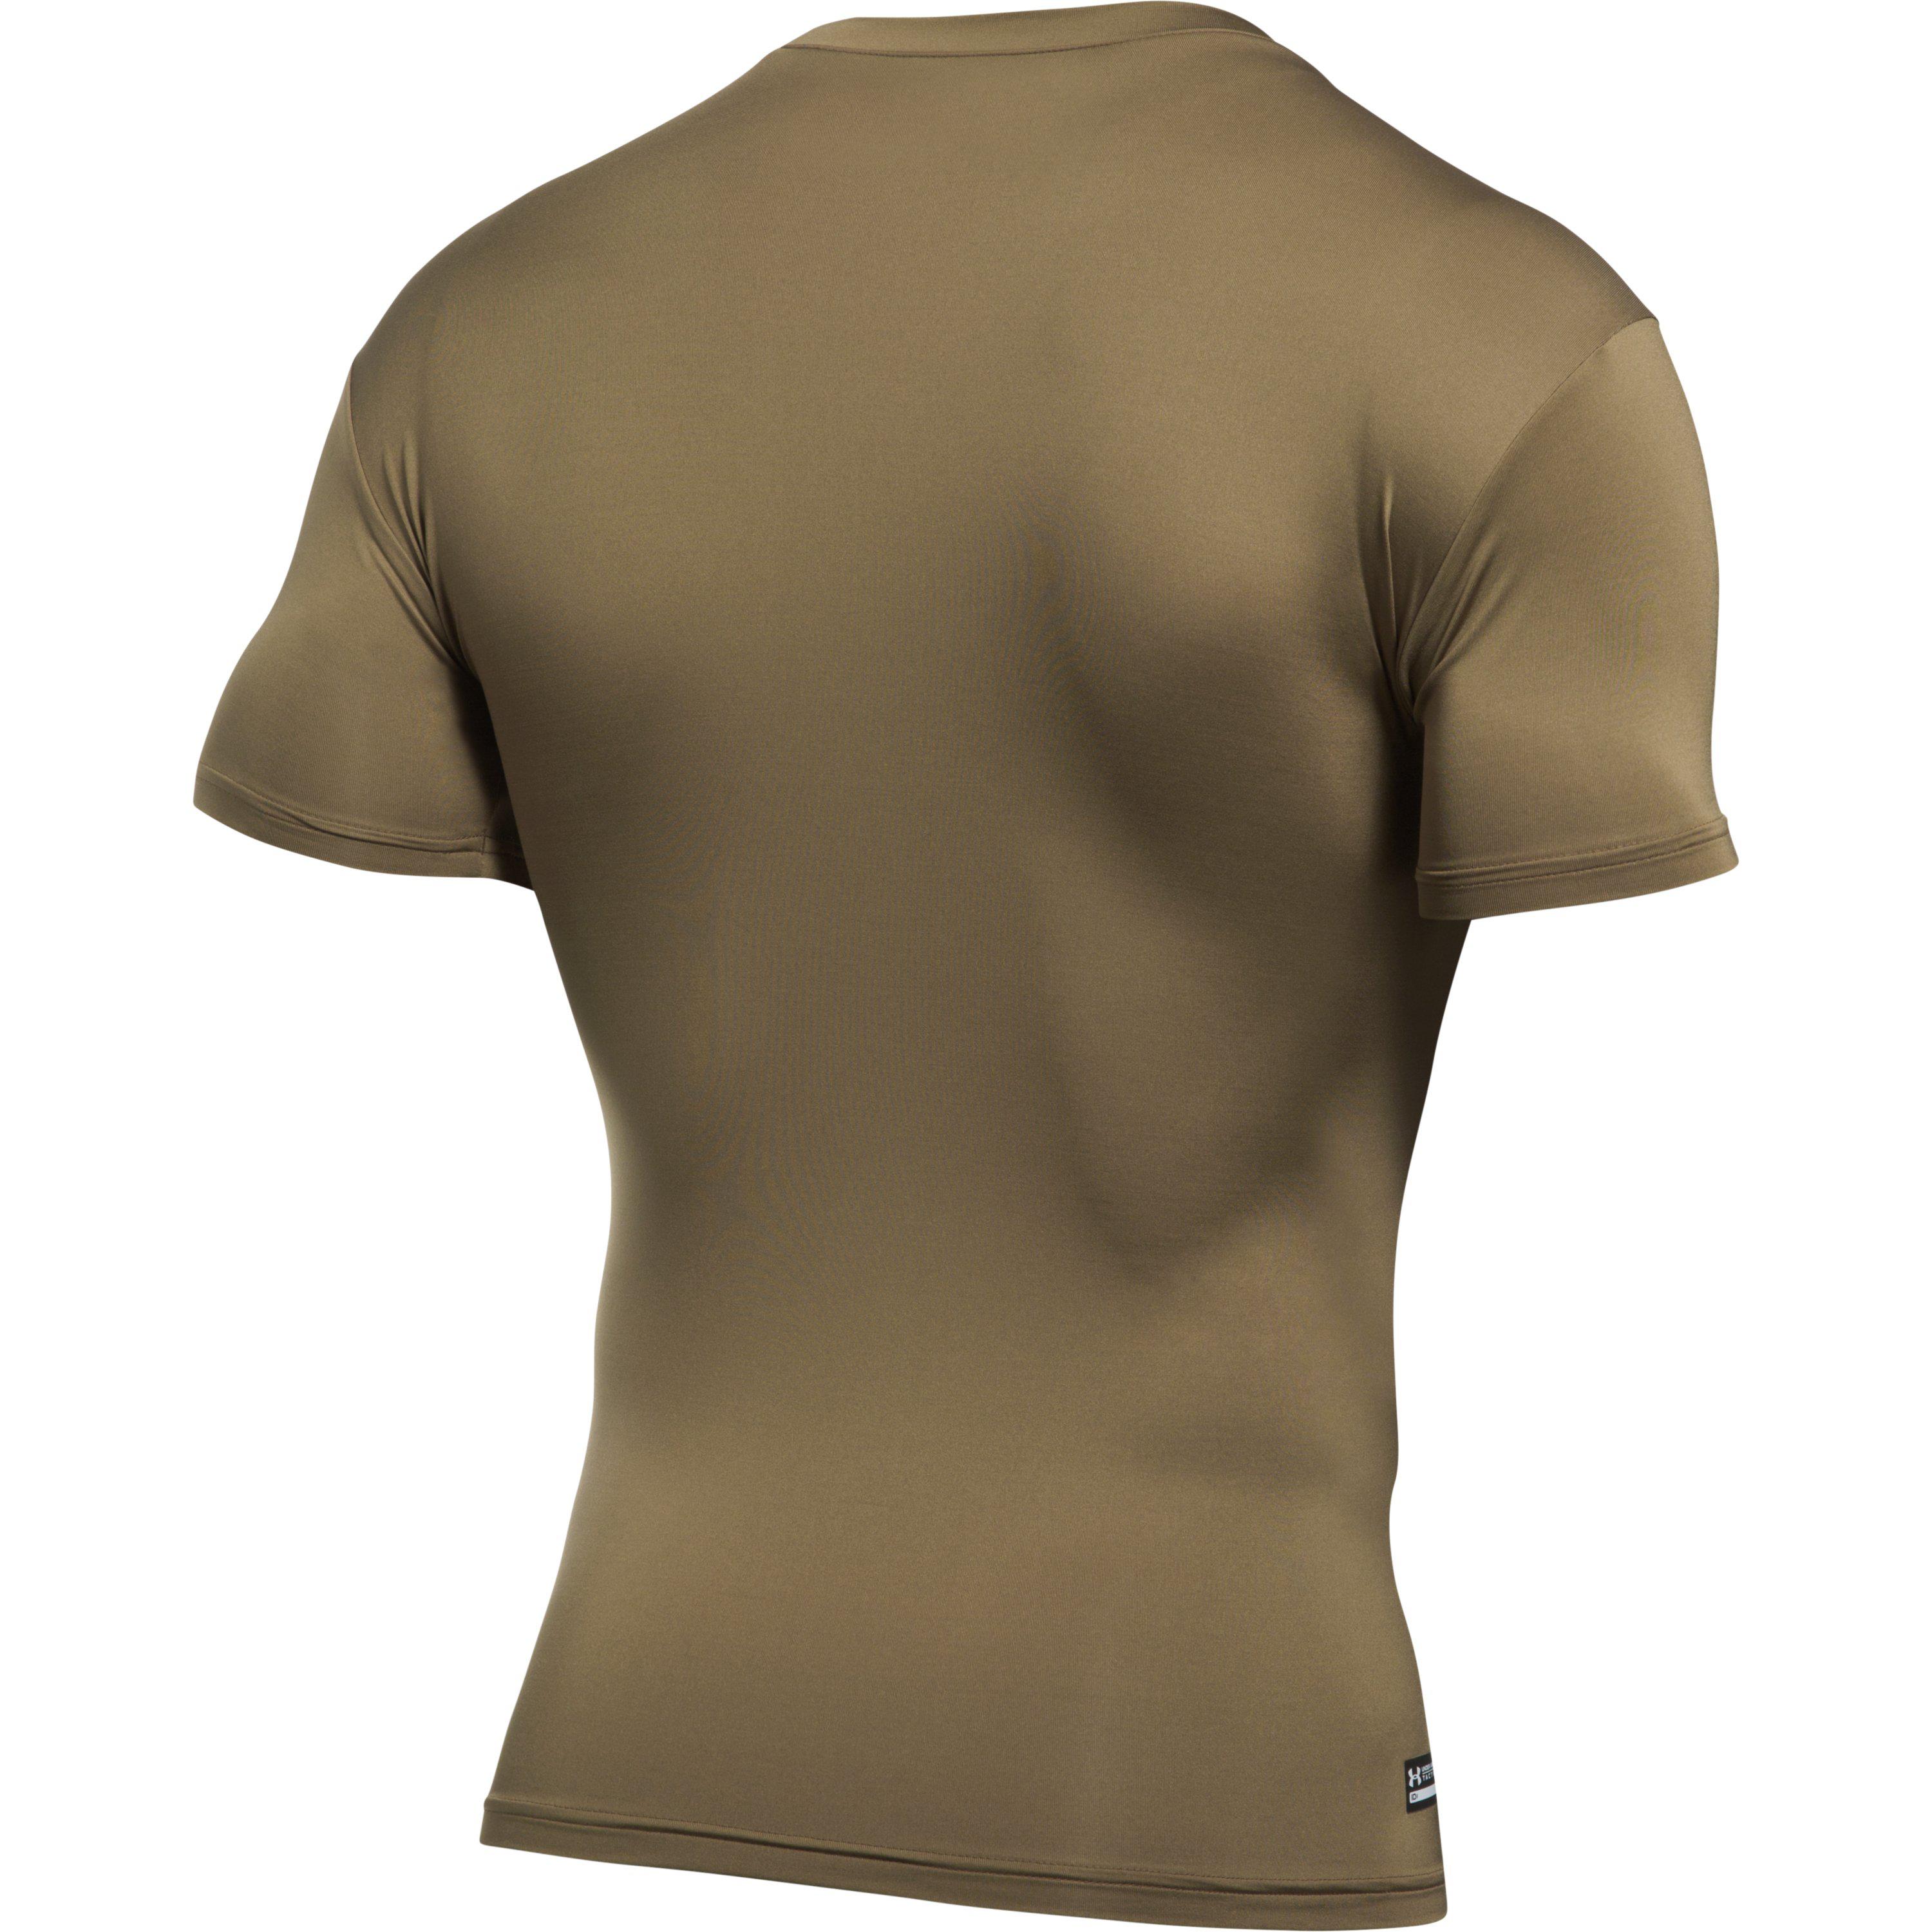 Under Armour Tactical Compression HeatGear T-shirt 3xl Black 12160070013x for sale online 